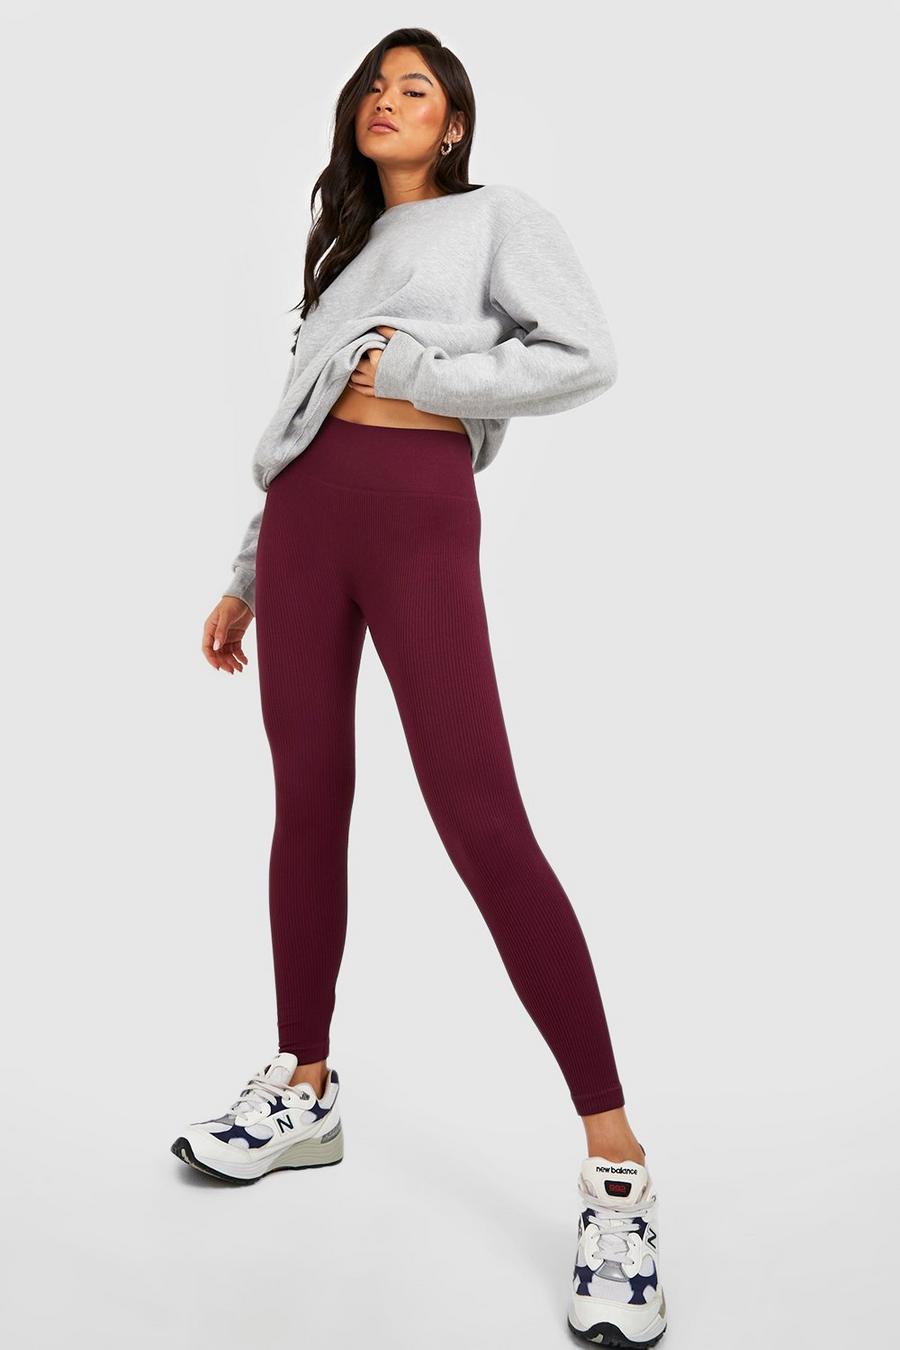 https://media.boohoo.com/i/boohoo/gzz39157_burgundy_xl/female-burgundy-ribbed-seamless-high-waisted-leggings/?w=900&qlt=default&fmt.jp2.qlt=70&fmt=auto&sm=fit